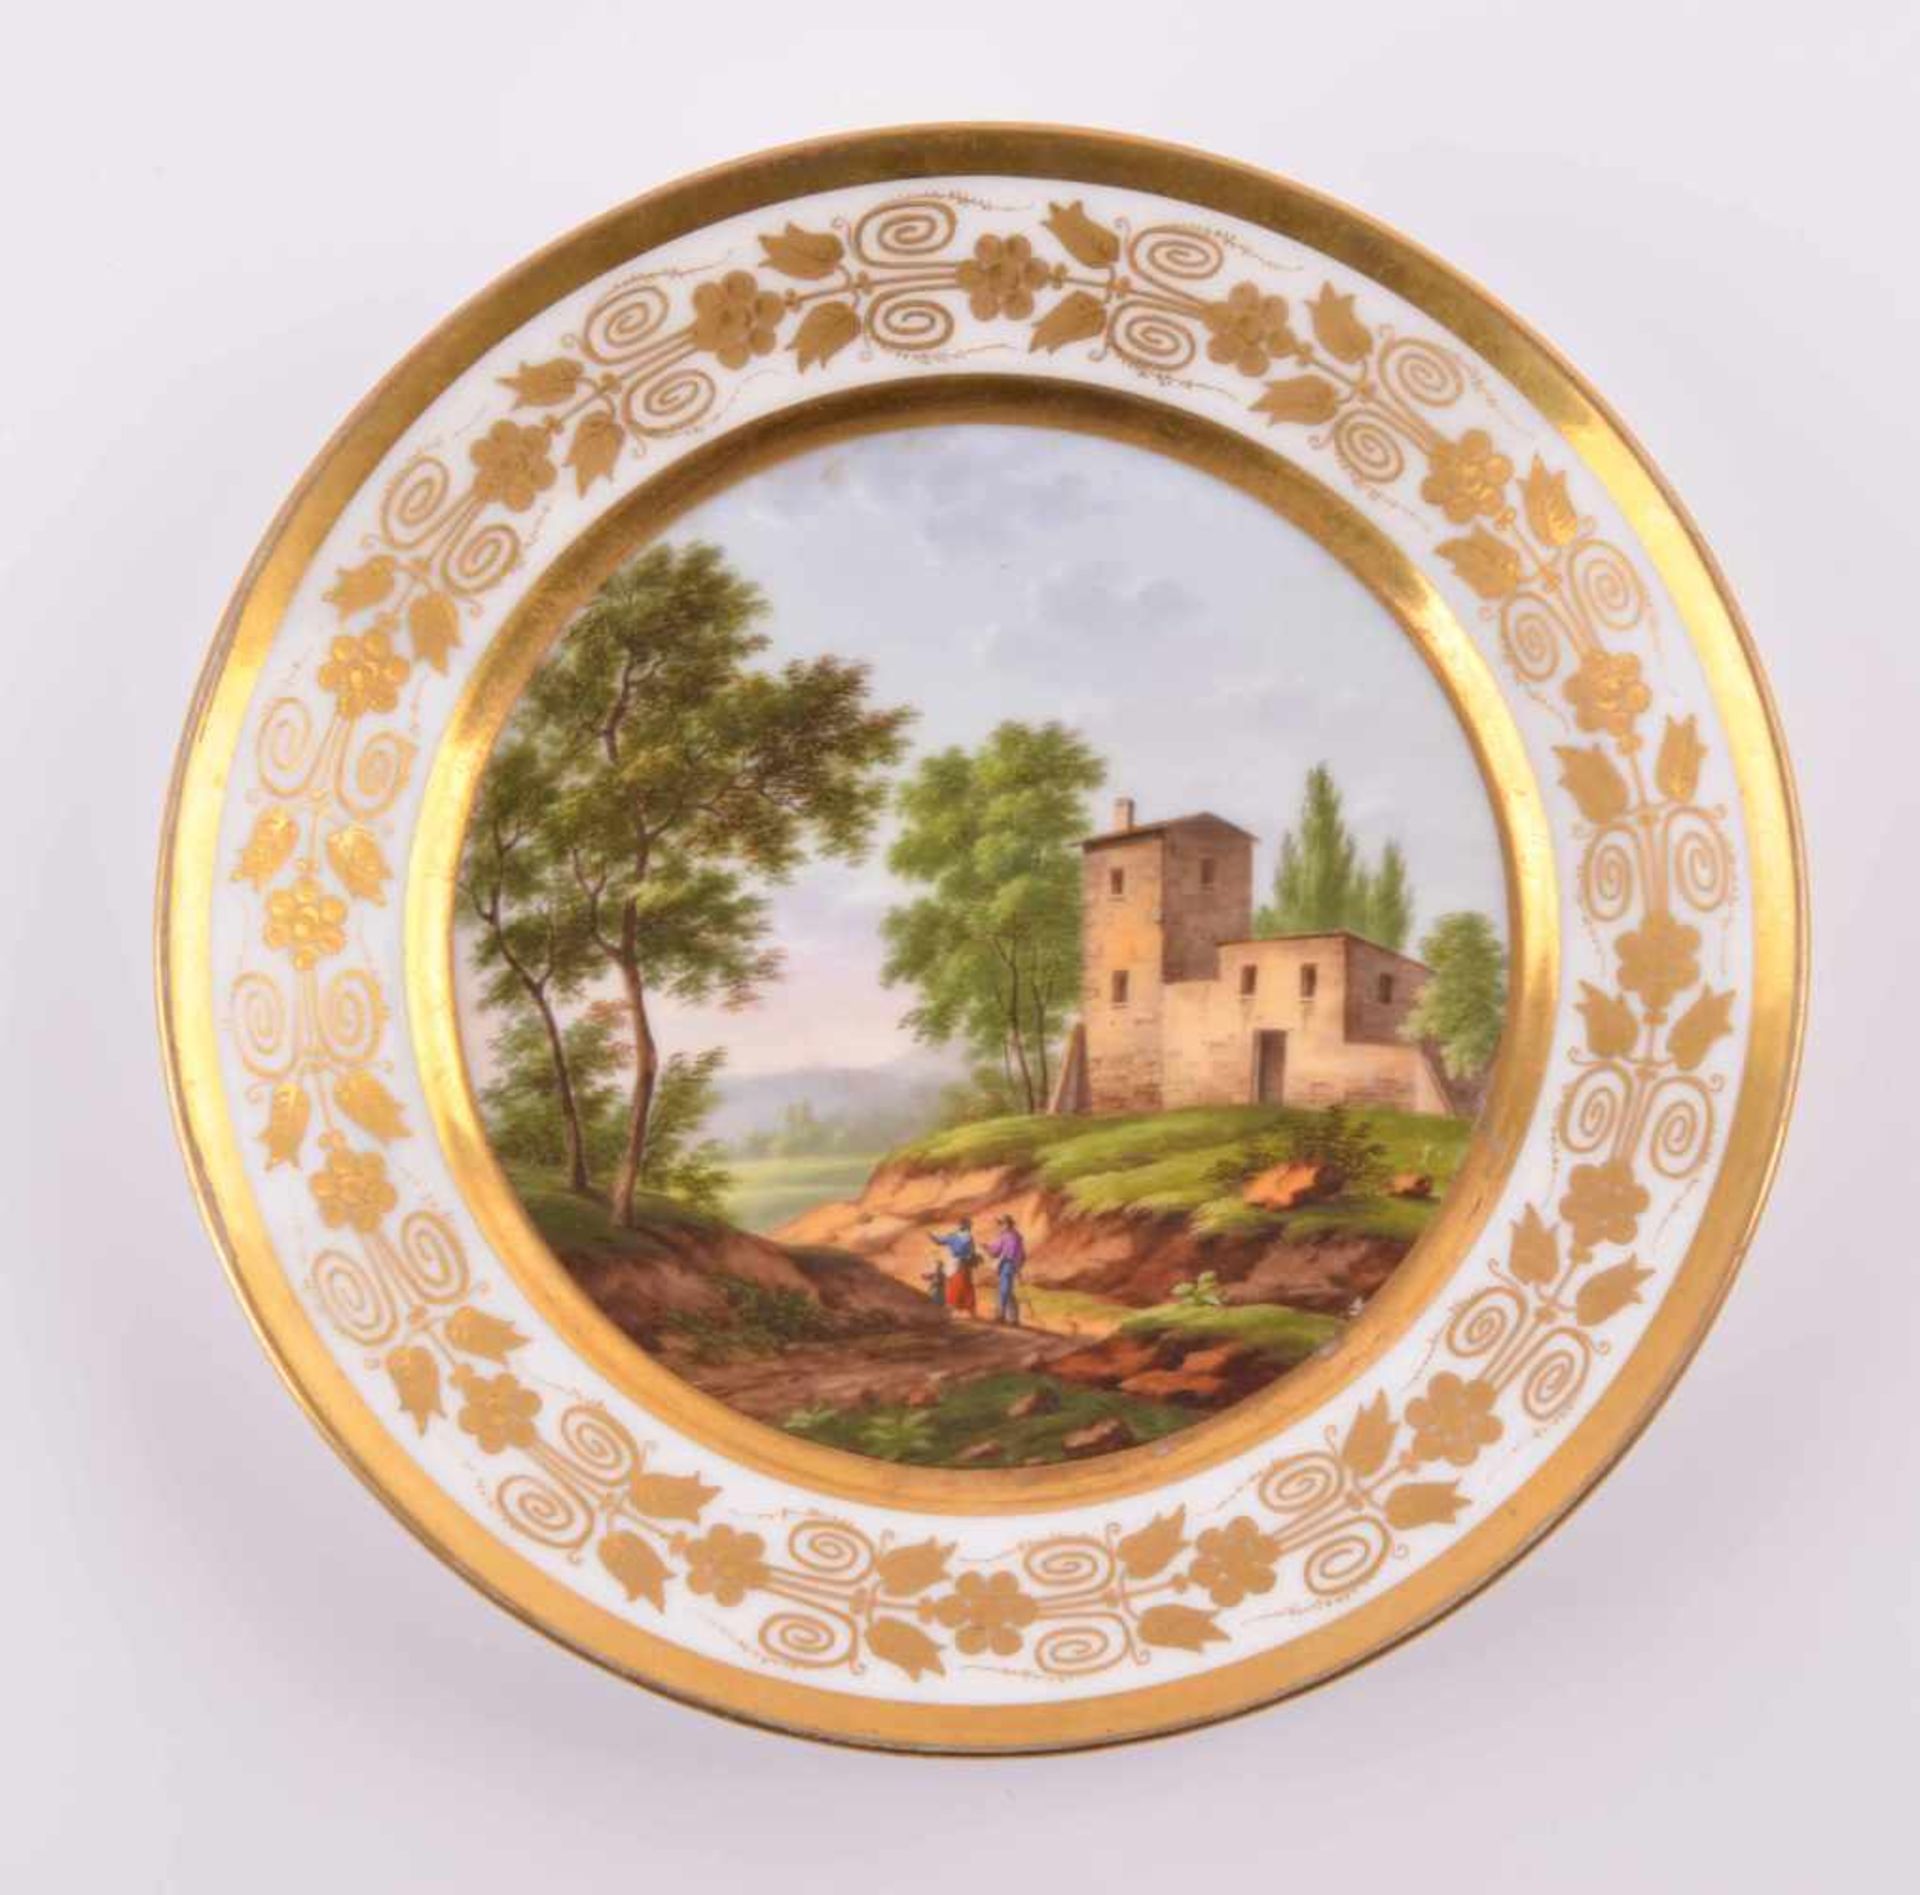 Biedermeier Ansichtentellerim Spiegel farbig staffiert mit Landschaftsdekor, goldstaffiert, Ø 22